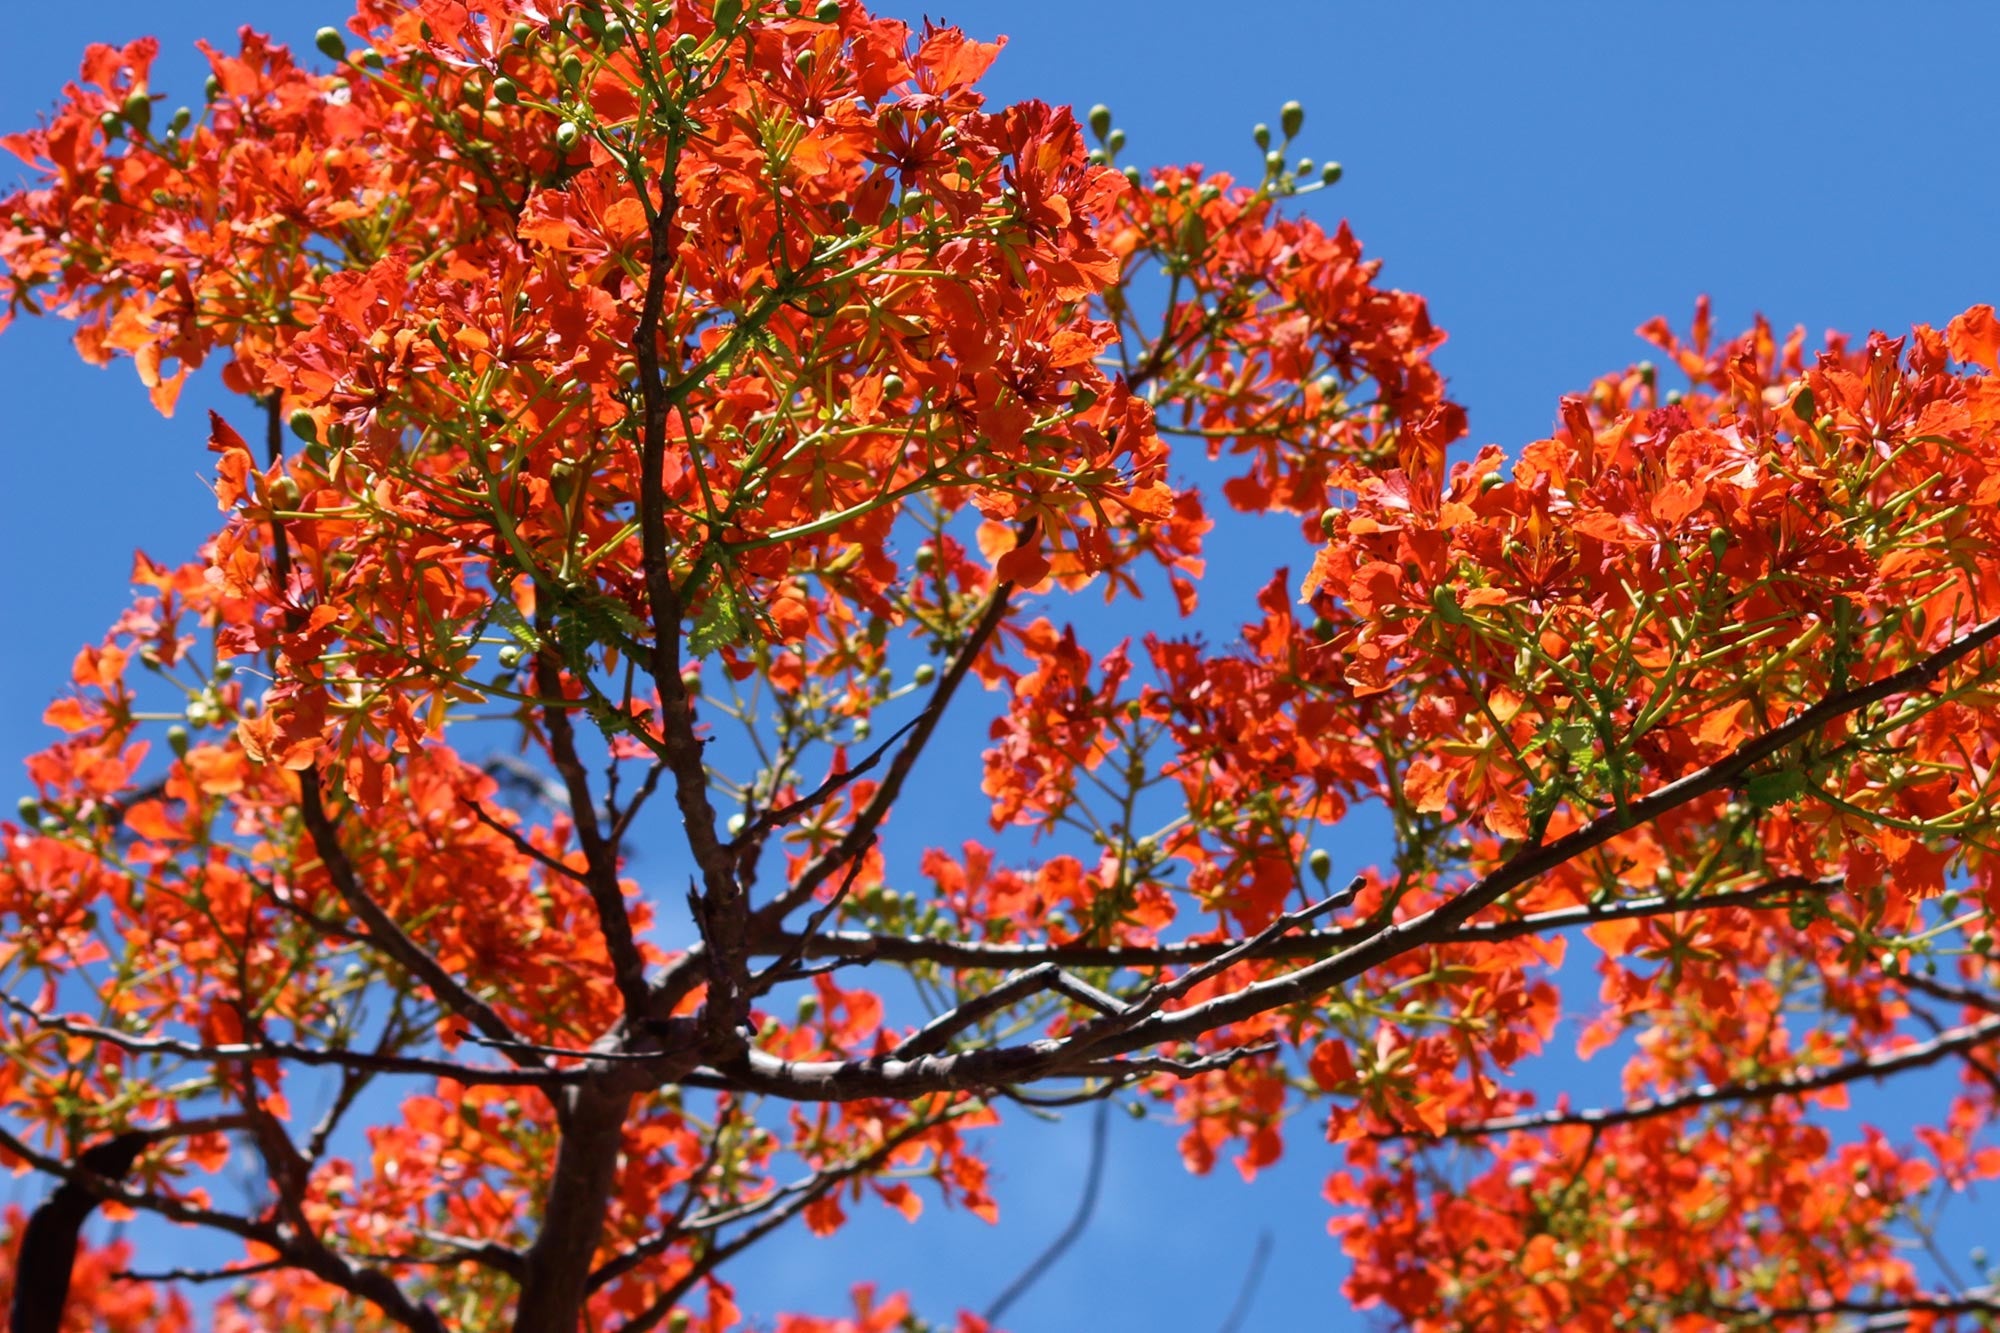 Flamboyant red bloom against blue sky in Mustique